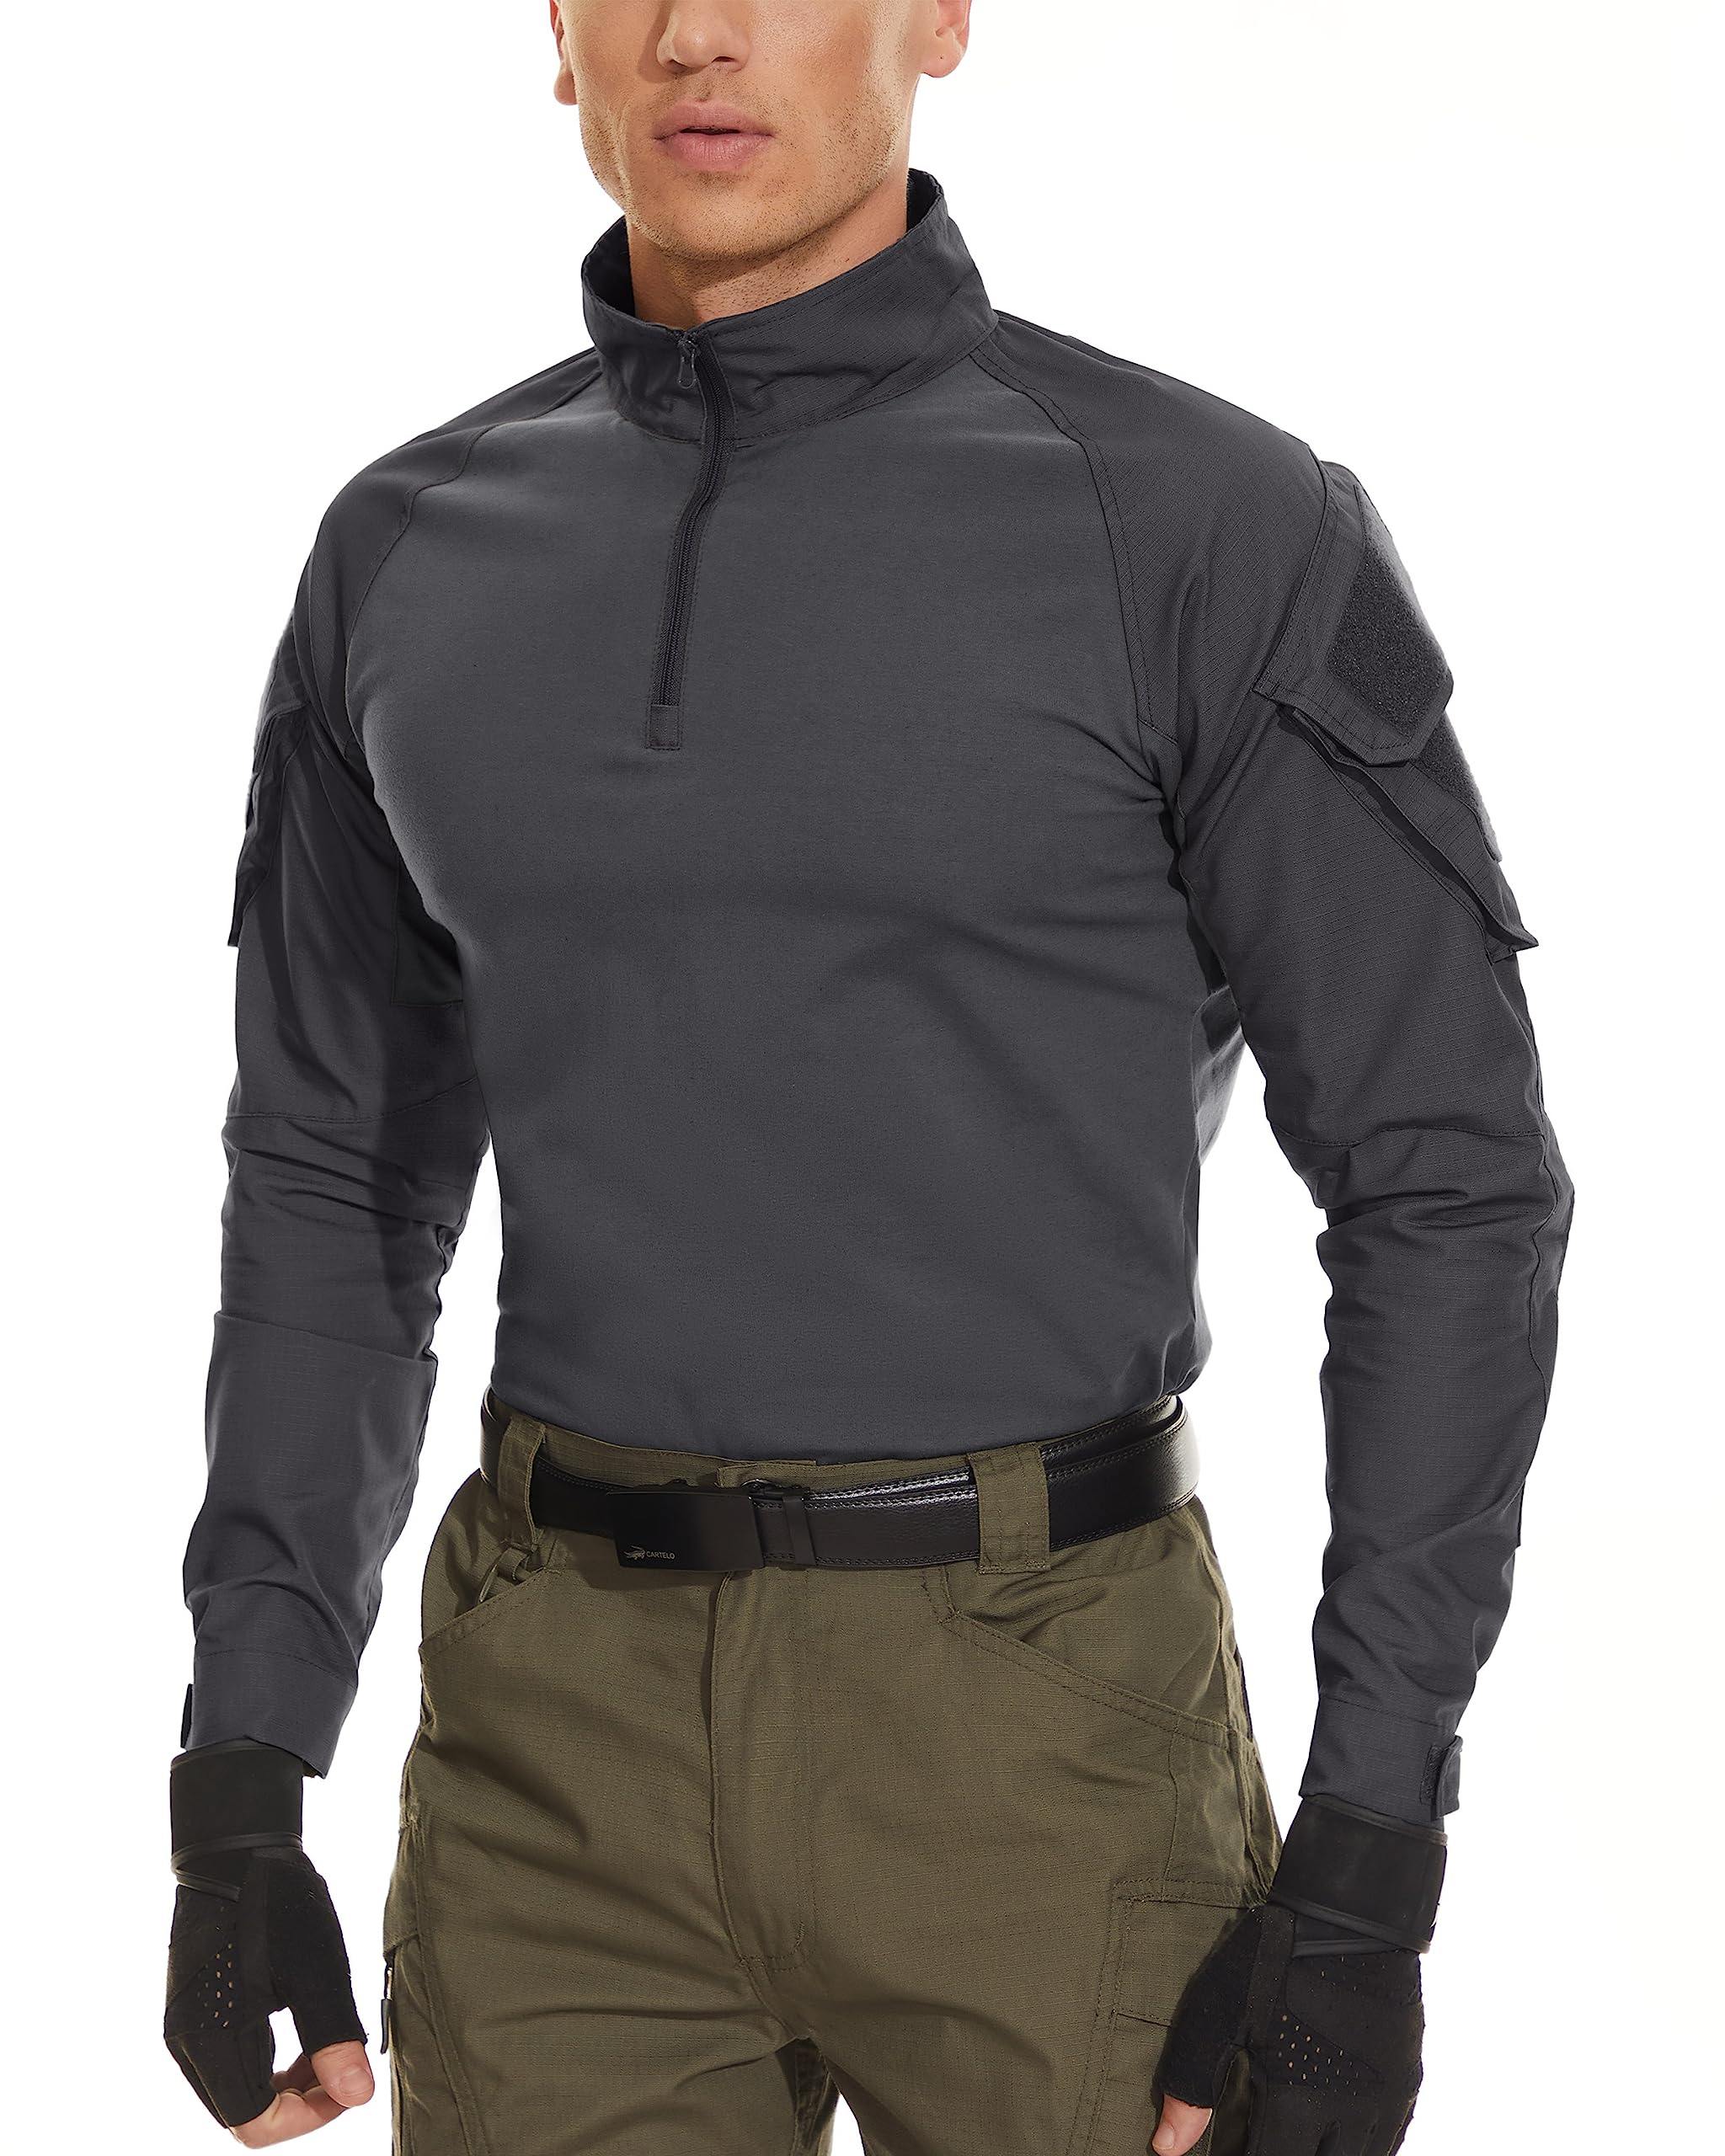 MAGCOMSEN Men's Tactical Long Sleeve Shirt - Combat, Military, Hiking, Work, Summer, Fishing